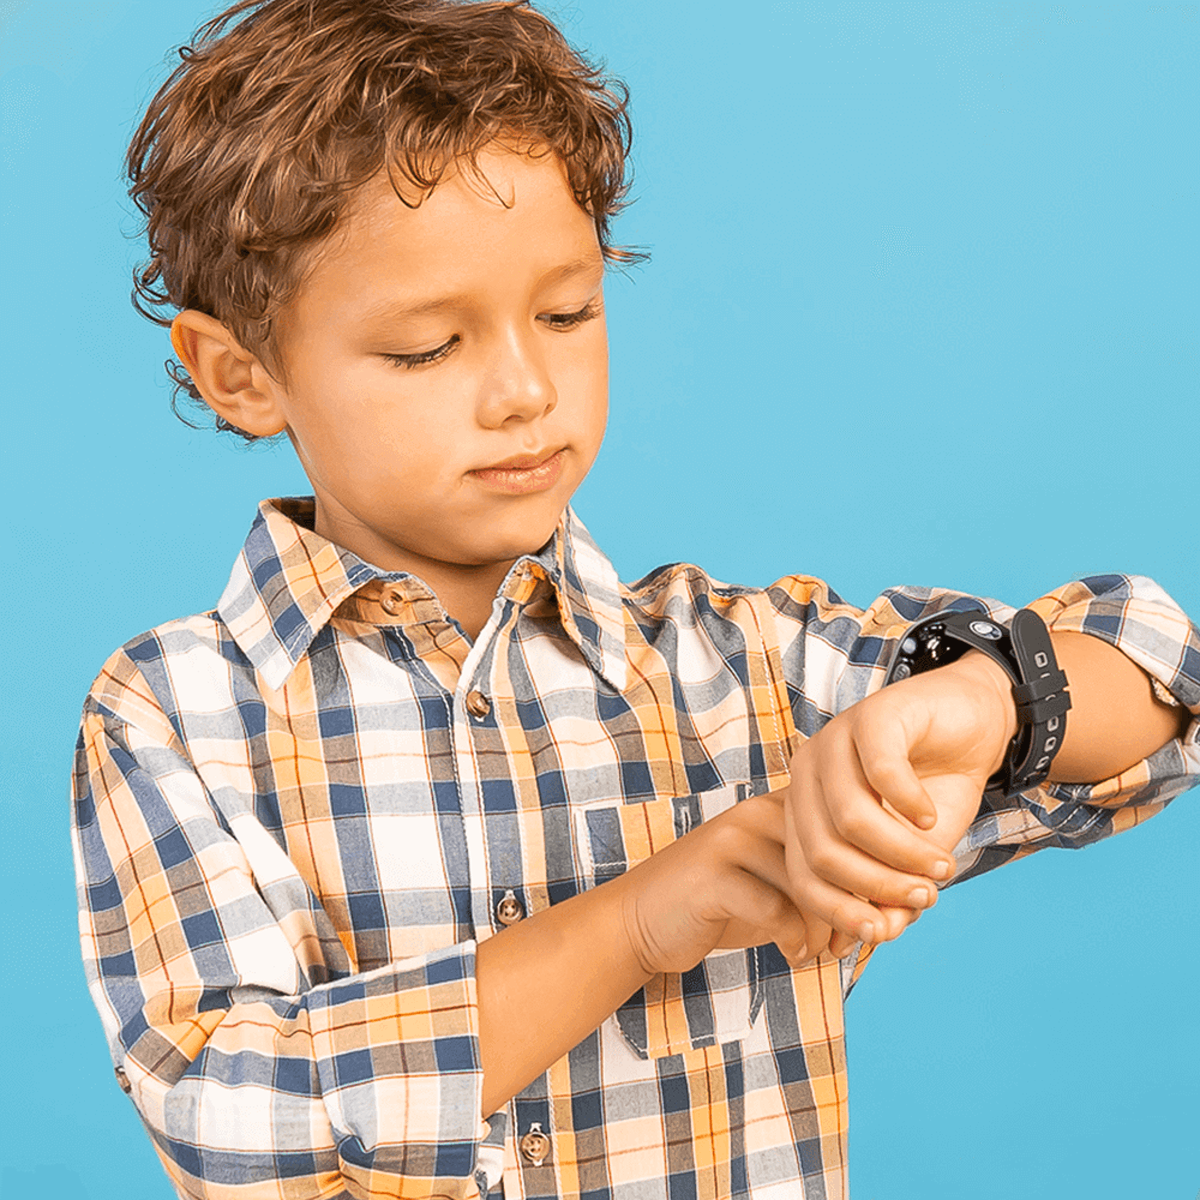 SOYMOMO Space Kunststoff, Smartwatch Kinder 4G Schwarz 10 cm